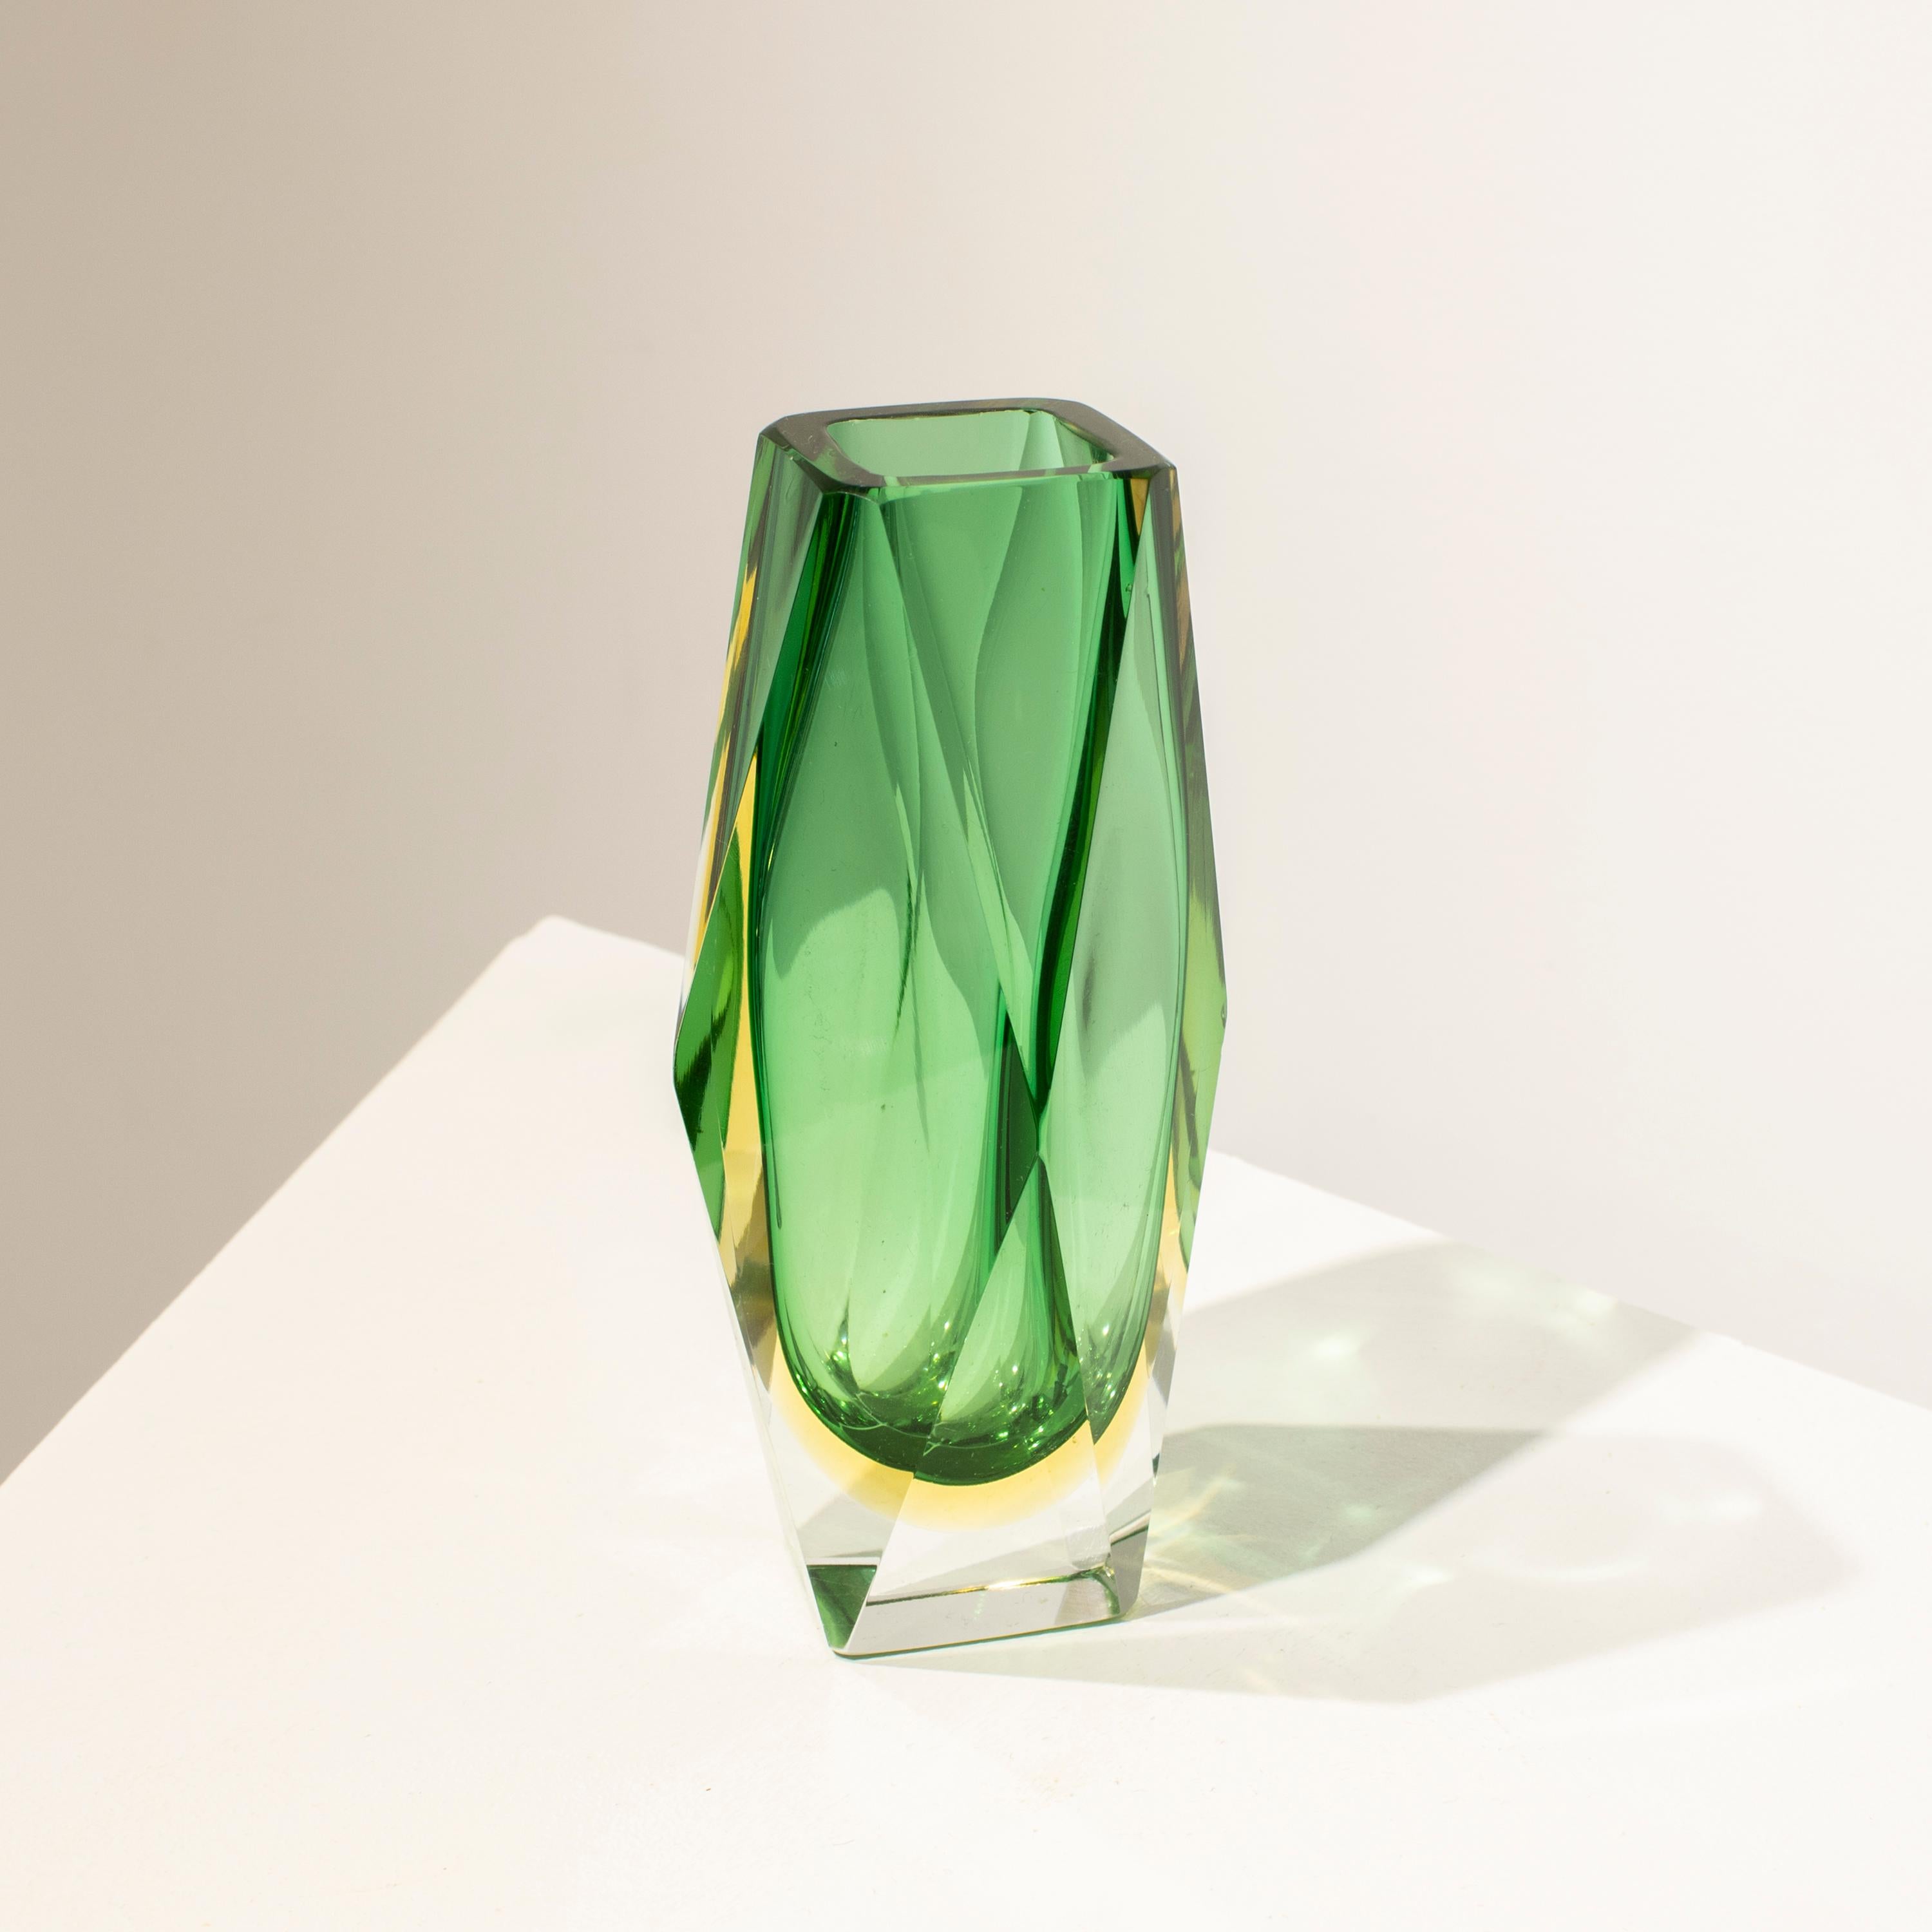 Italian Flavio Poli Hand-Crafted Green Murano Small Glass Vase, Italy, 1970 For Sale